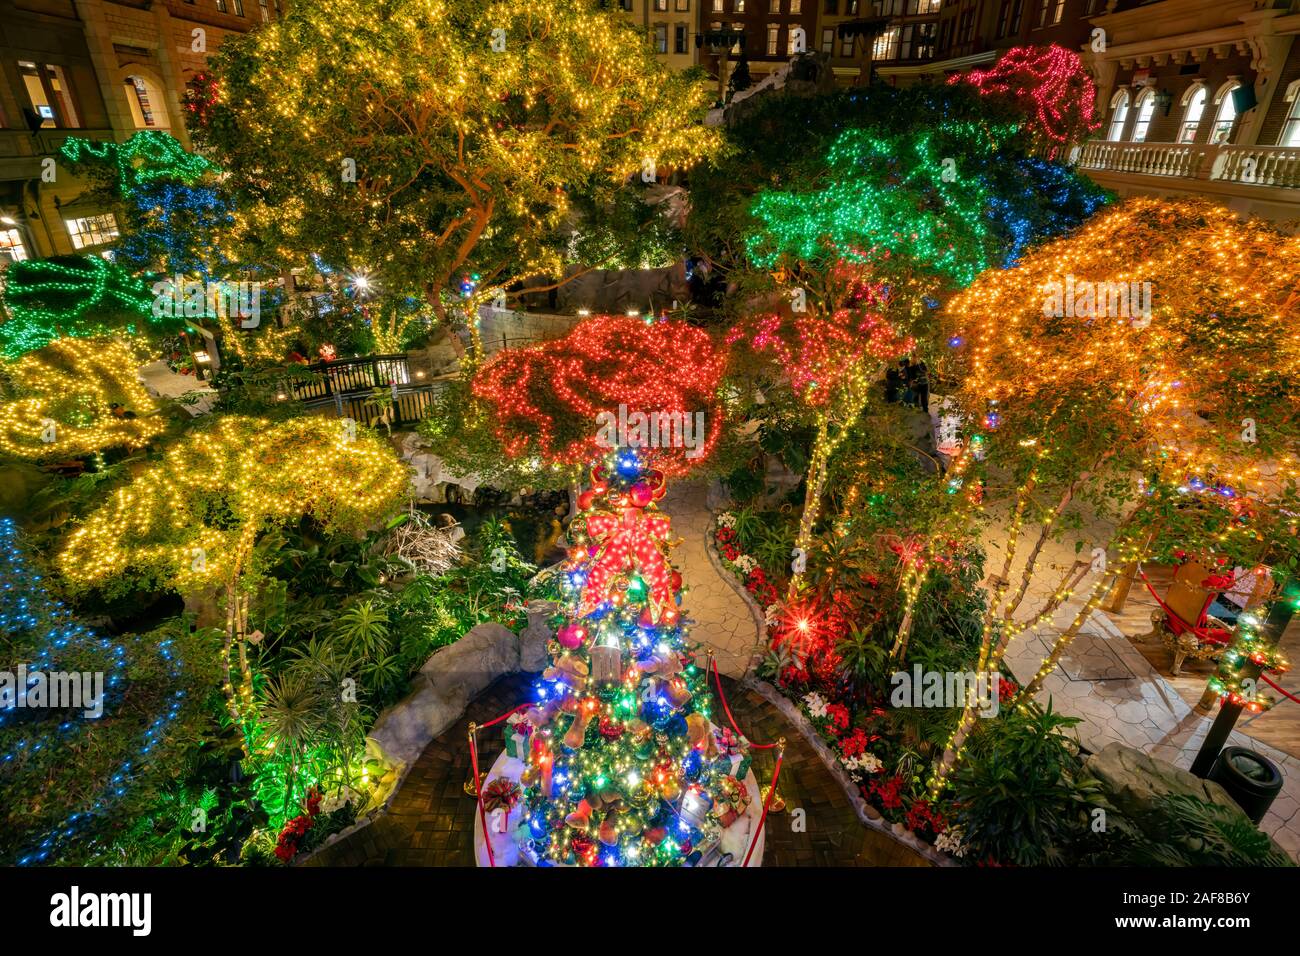 Las Vegas, DEC 12: Beautiful Christmas lights of the Mystic Falls Park in Sam's Town on DEC 12, 2019 at Las Vegas, Nevada Stock Photo